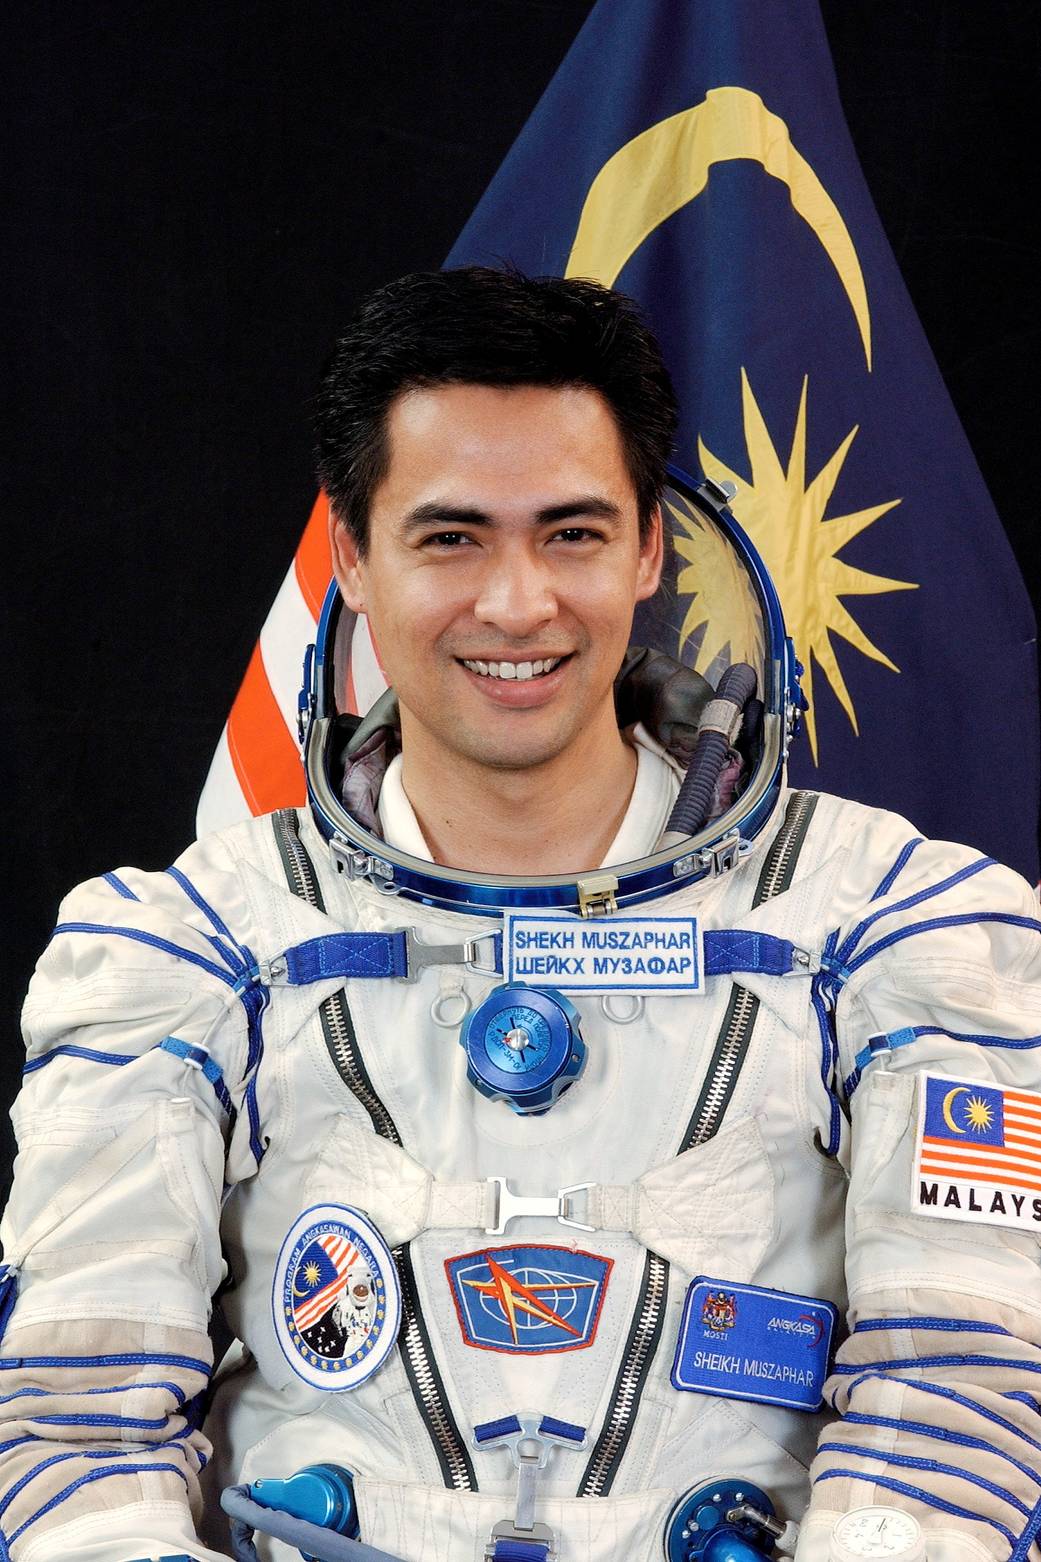 JSC2007-E-45198 (July 2007) --- Malaysian spaceflight participant Sheikh Muszaphar Shukor